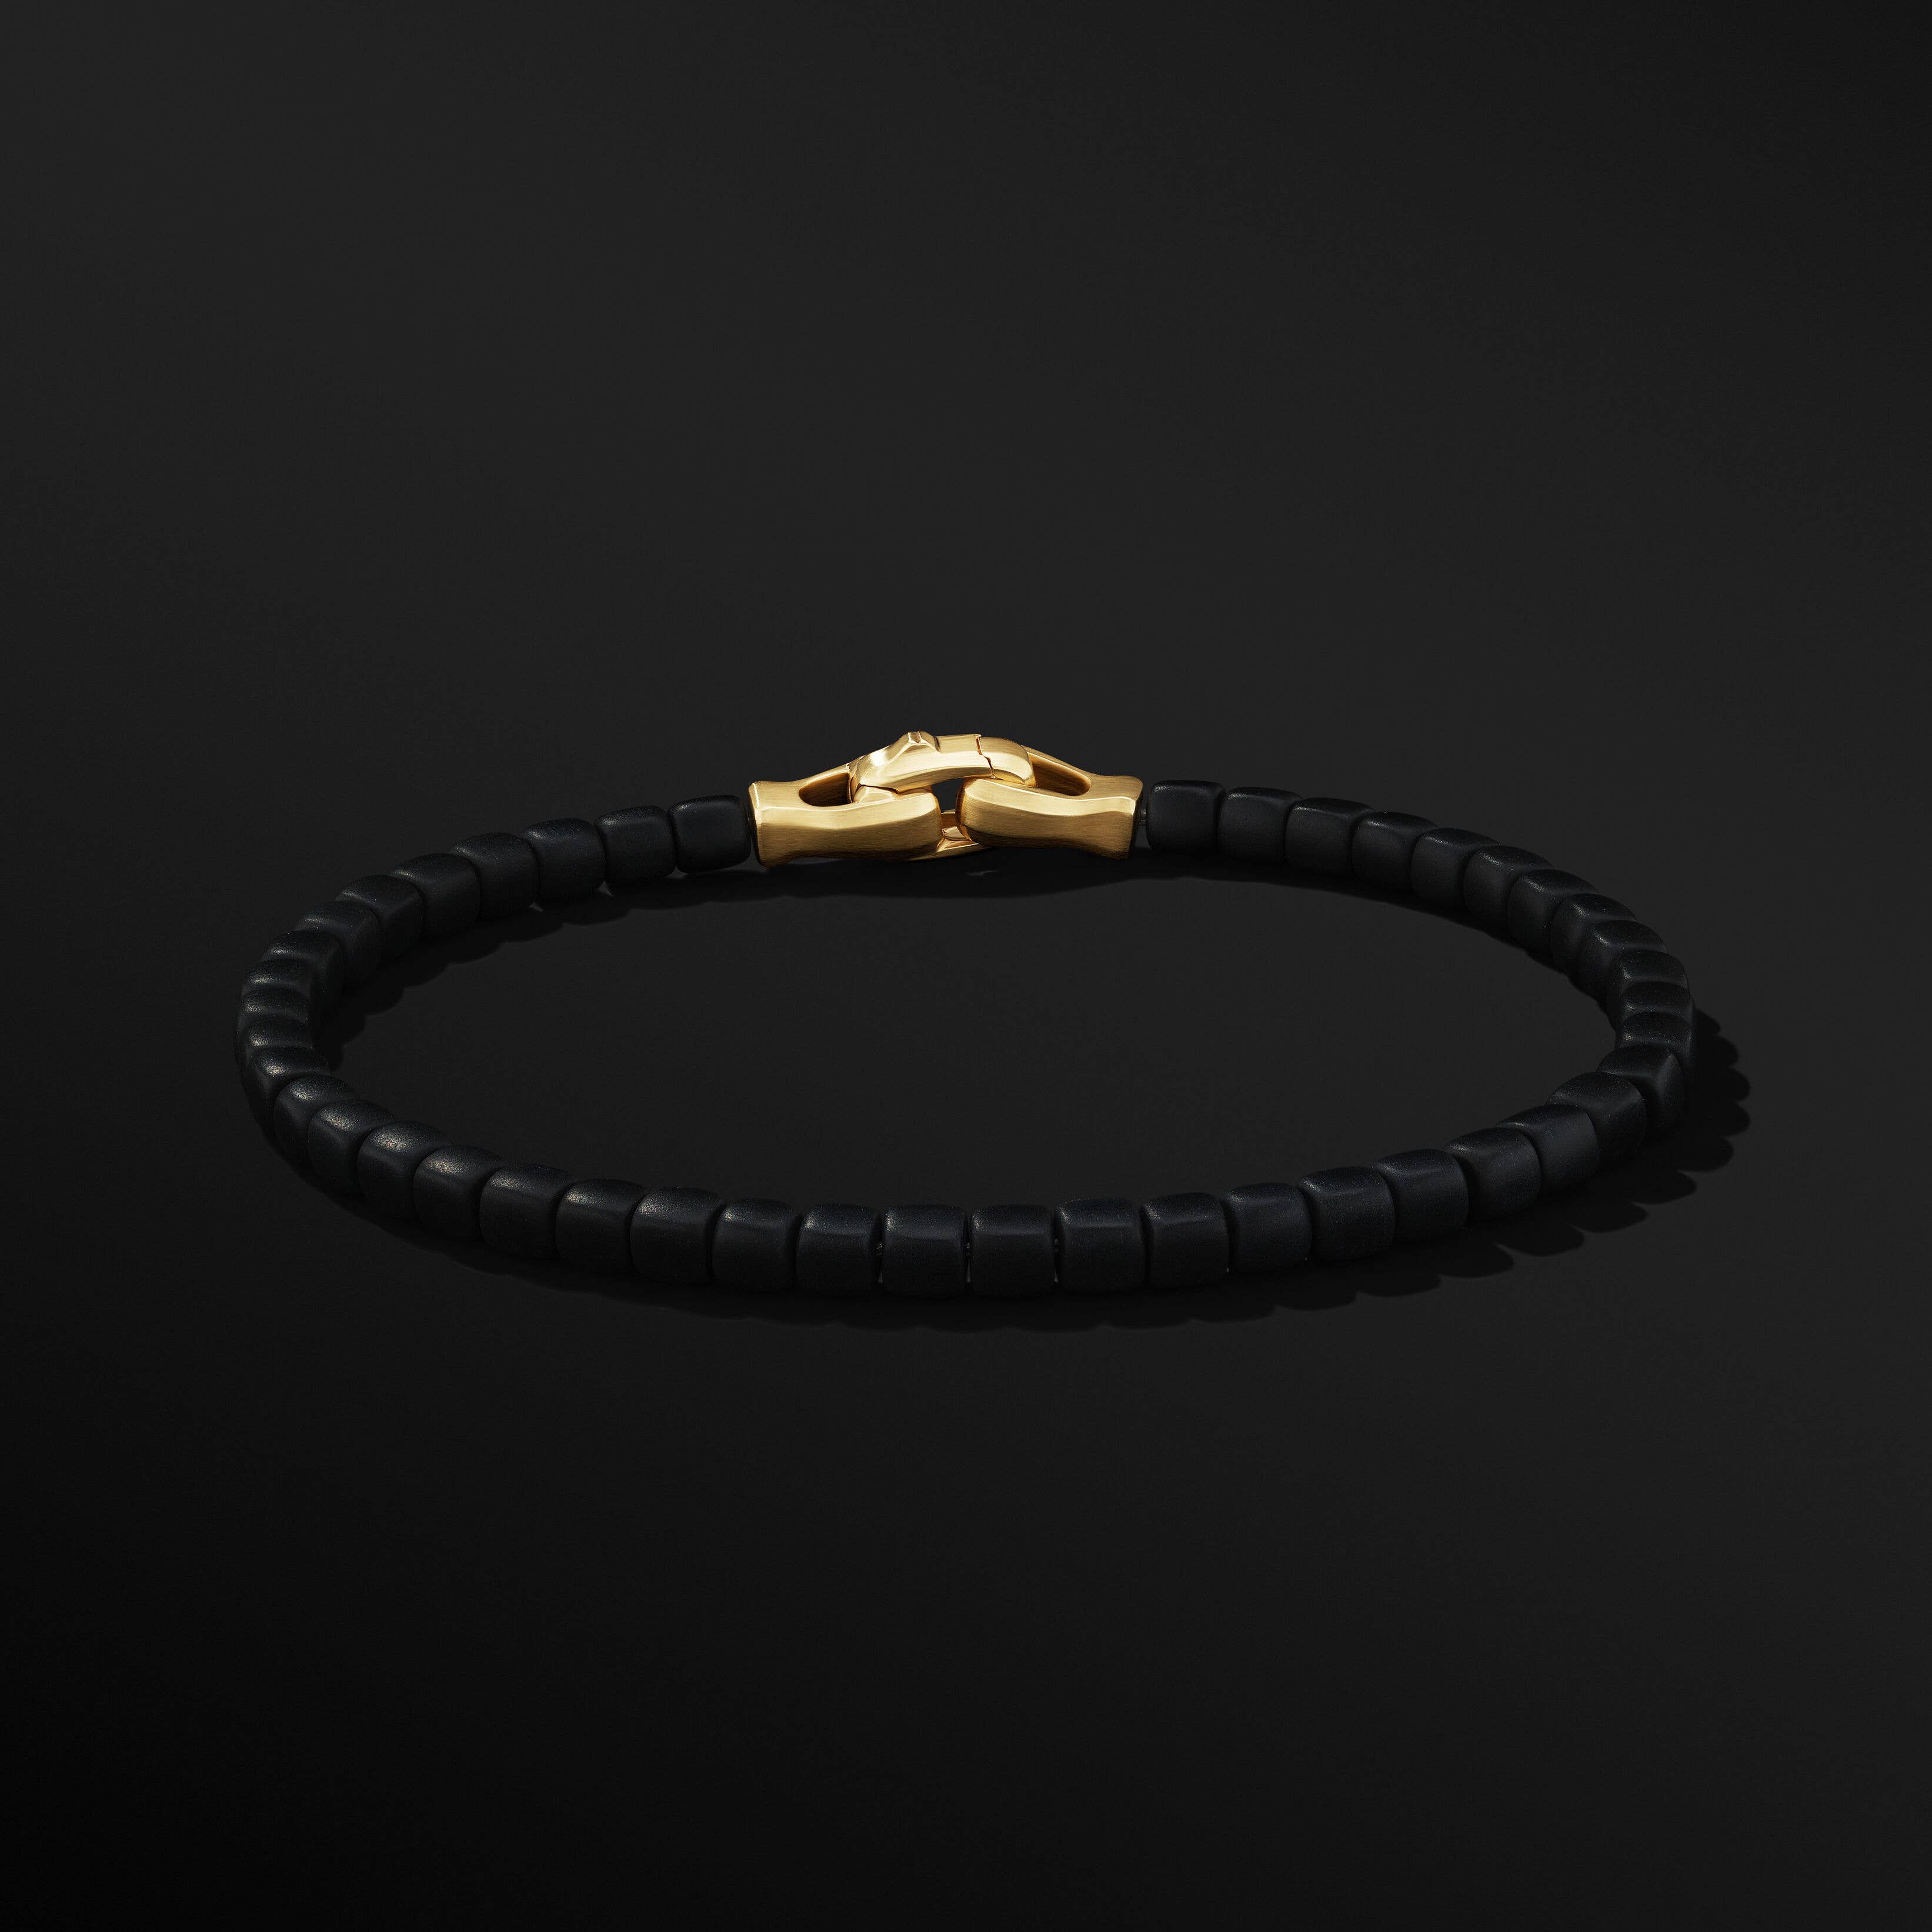 Spiritual Beads Cushion Bracelet with Black Onyx and 18K Yellow Gold